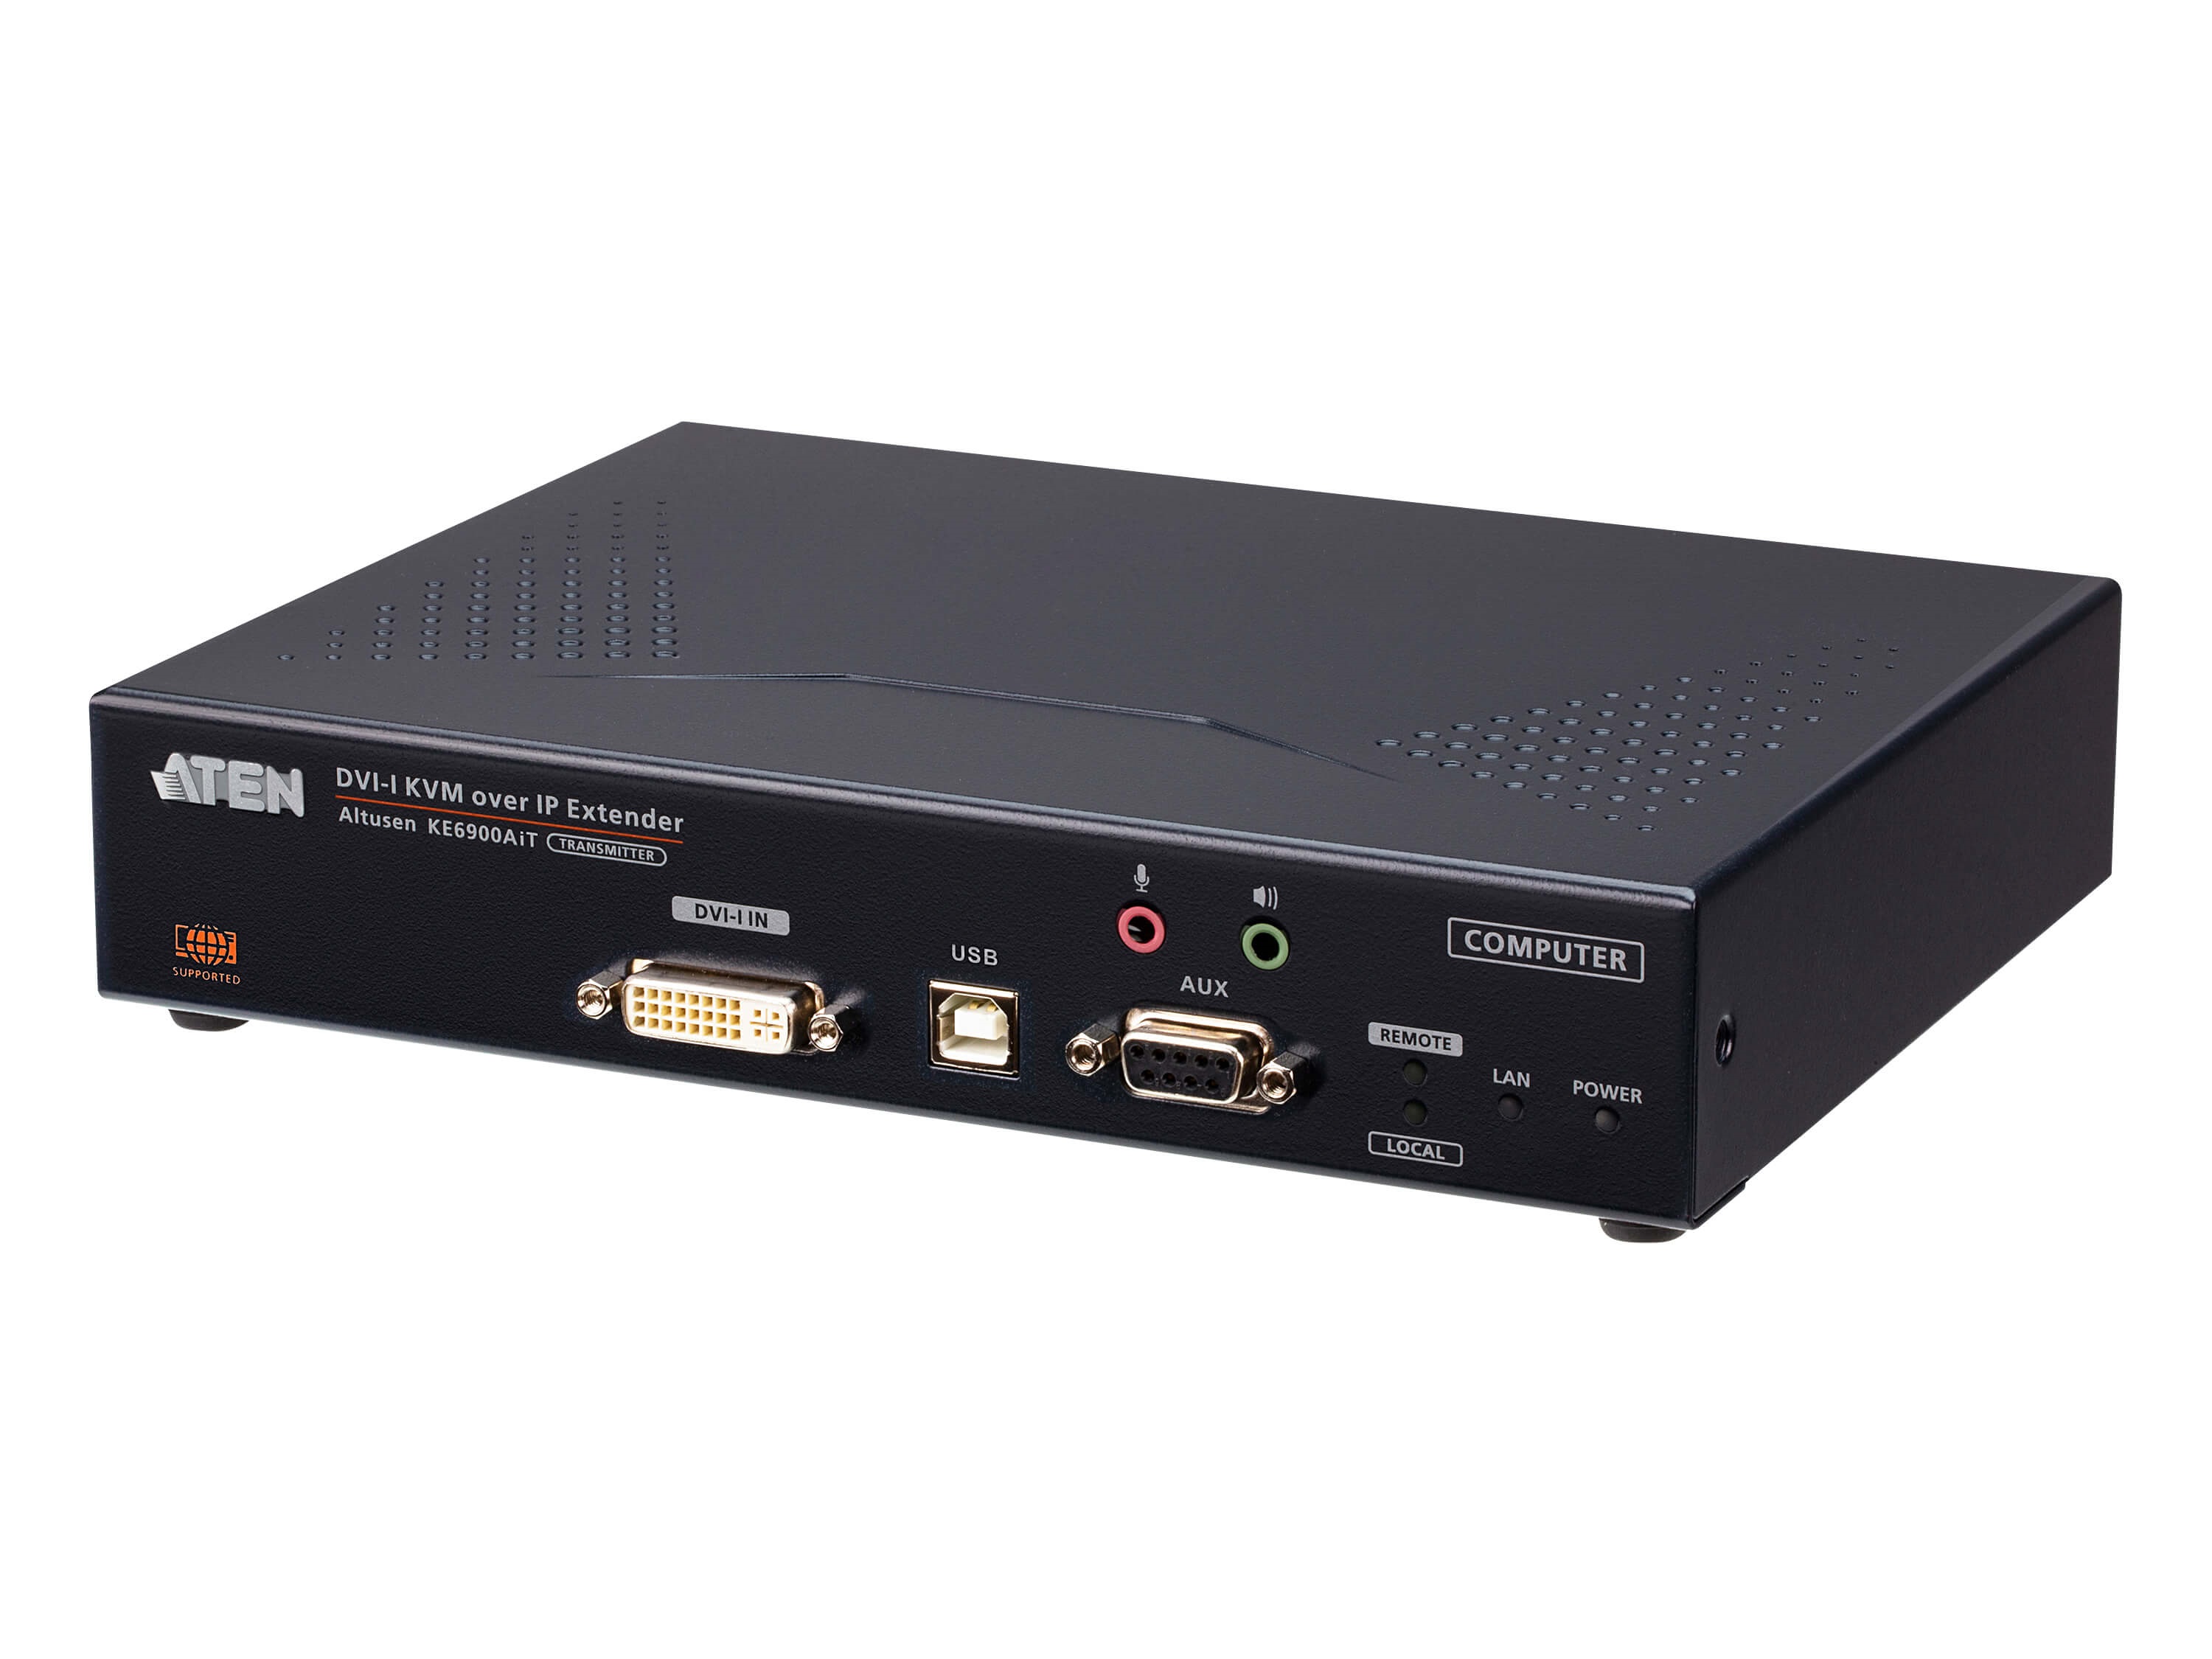 KE6900AIT DVI-I Single Display KVM over IP Transmitter with Internet Access by Aten